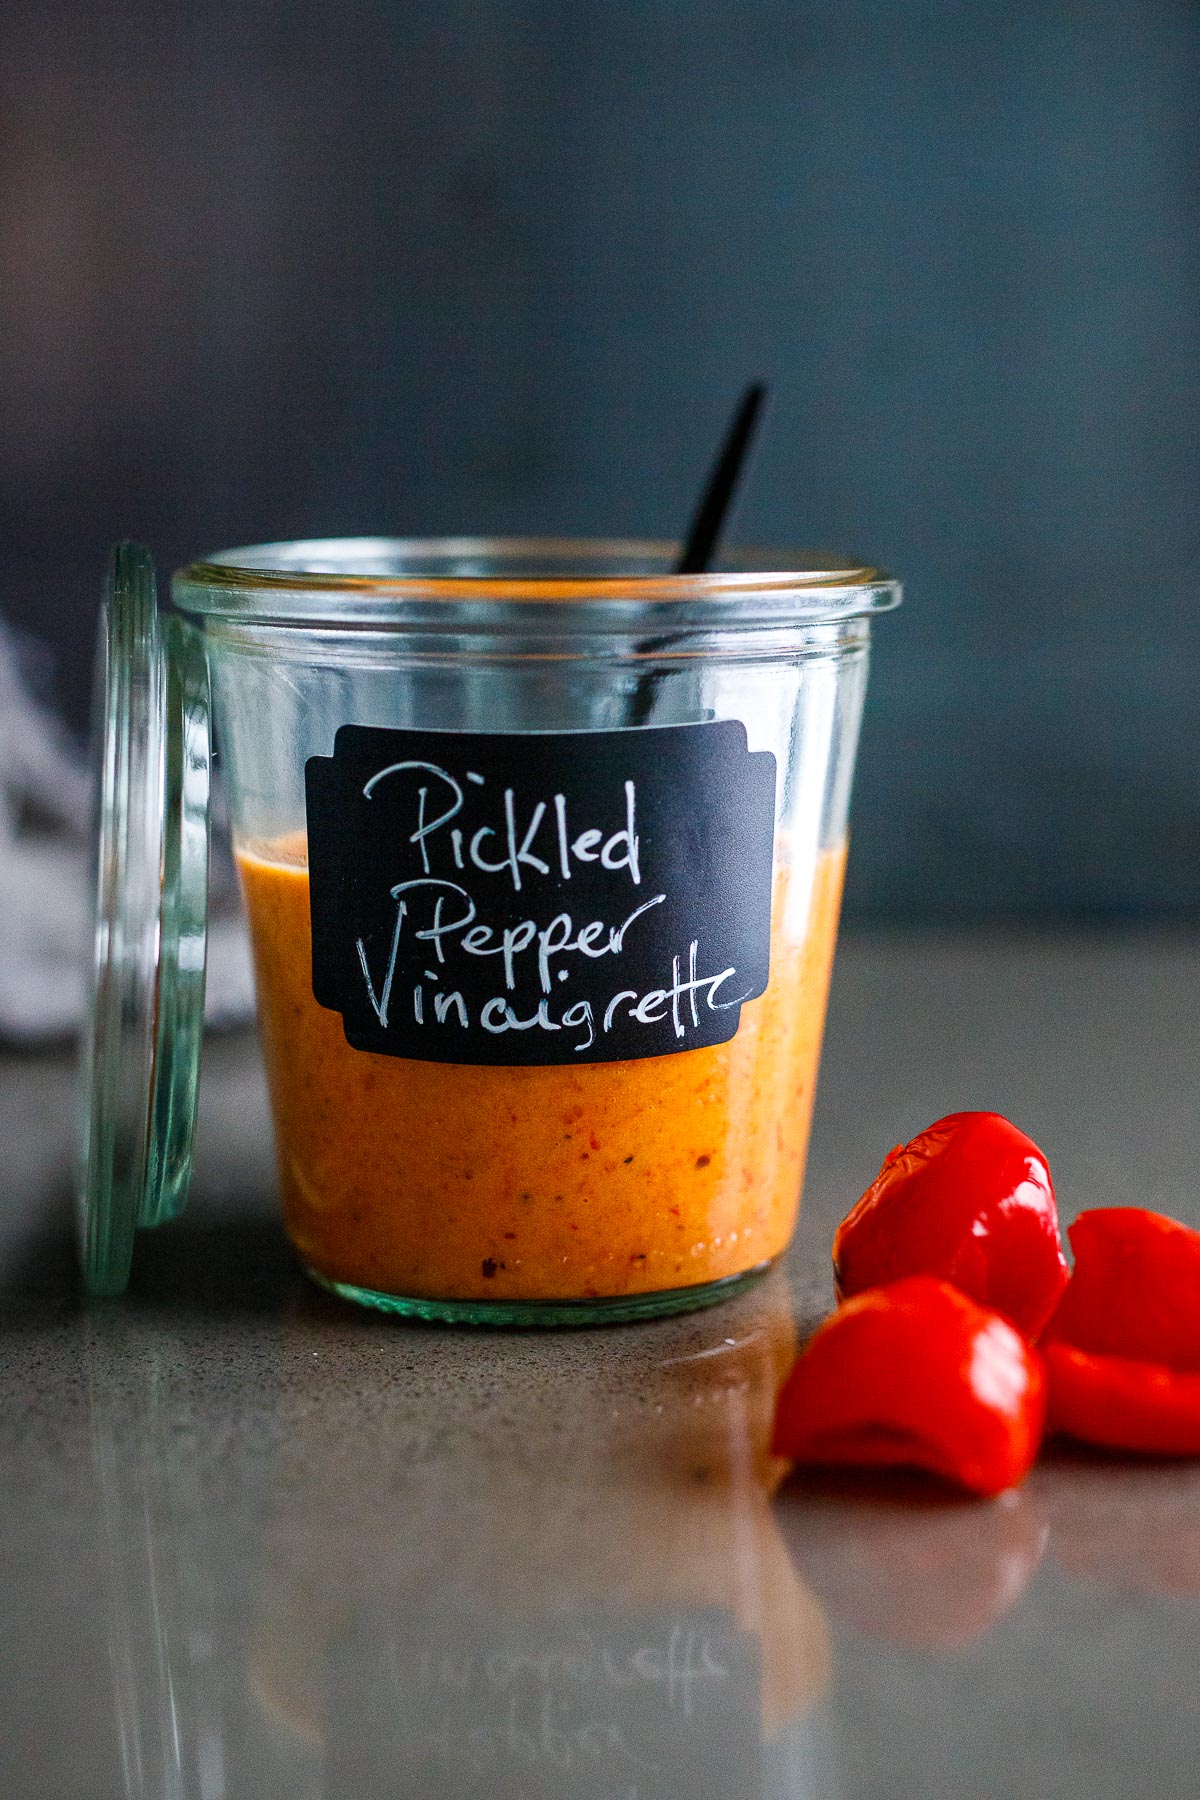 Pickled Pepper Vinaigrette in a weck jar